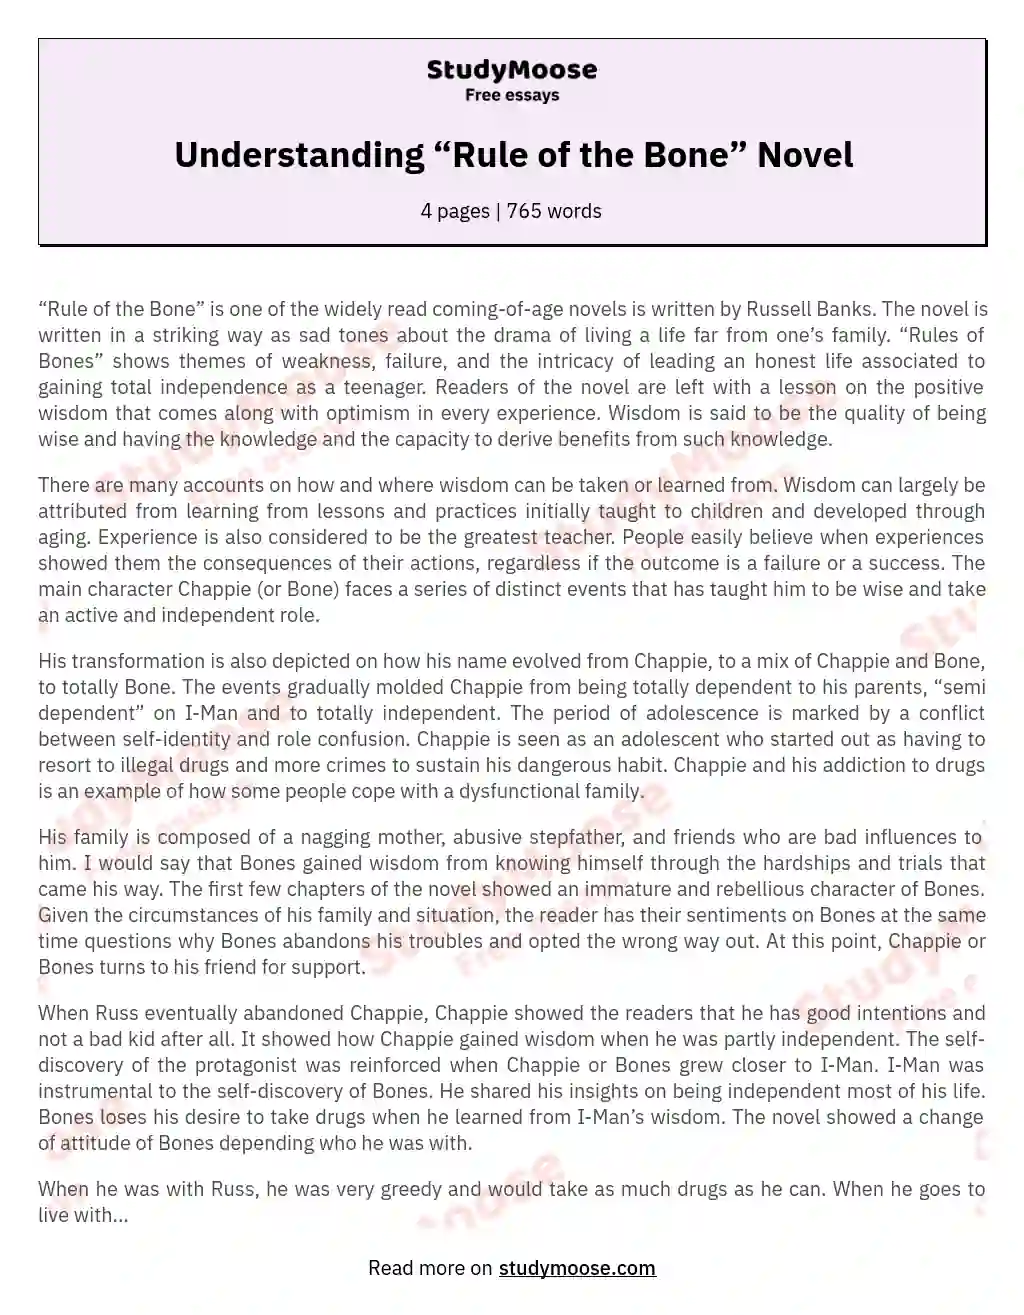 Understanding “Rule of the Bone” Novel essay